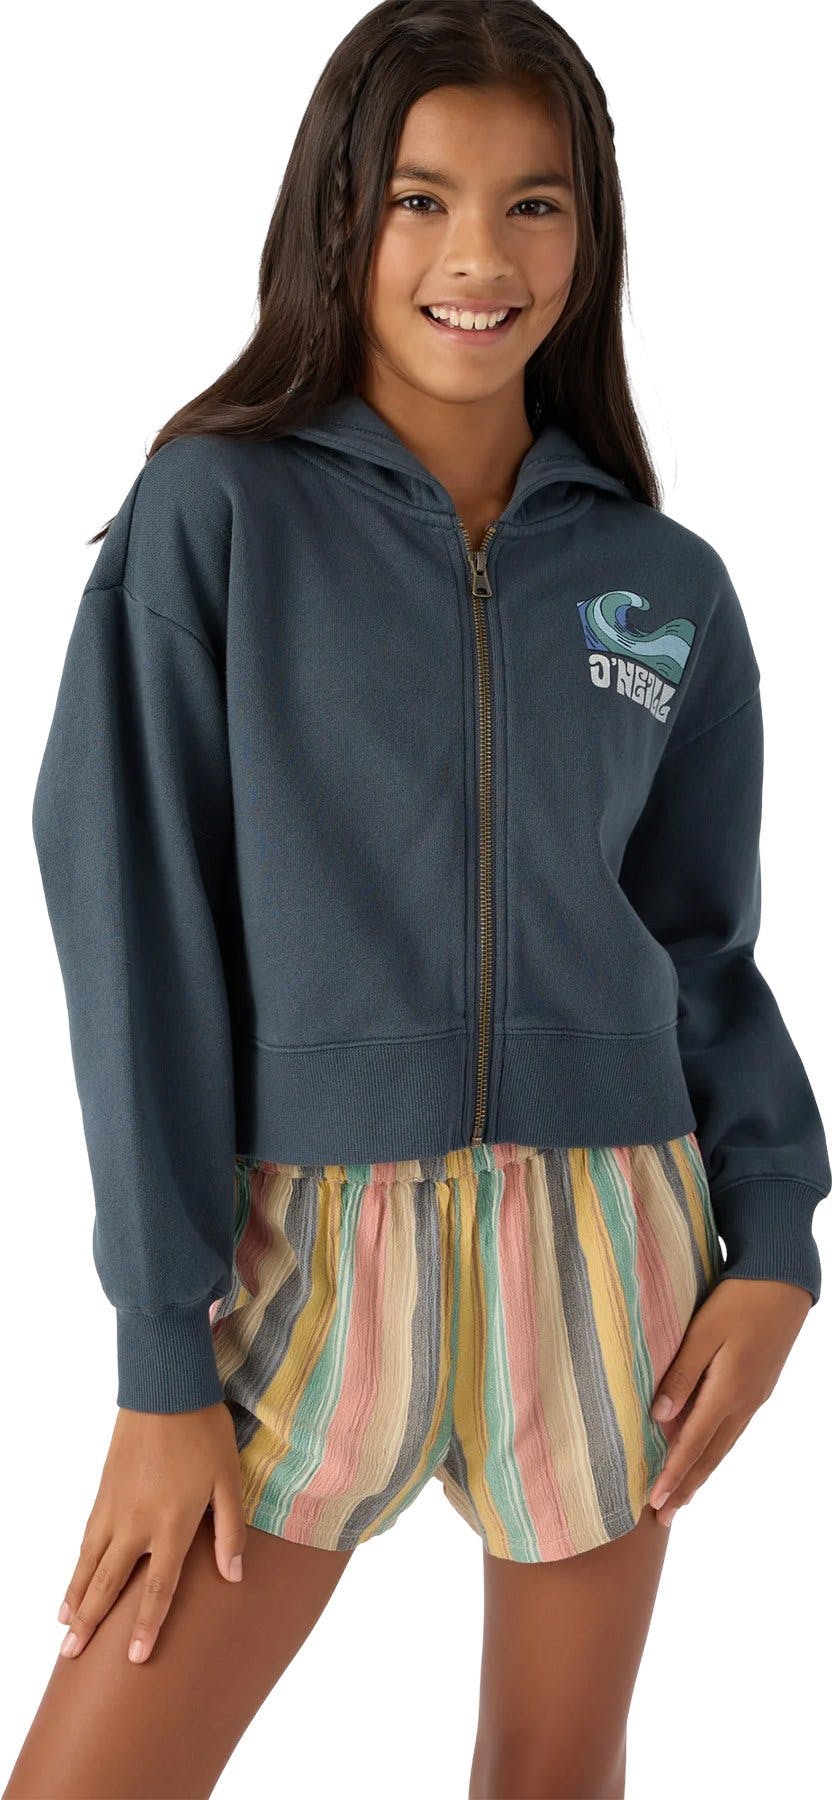 Product image for Darcie Zip-Up Hooded Sweatshirt - Girls